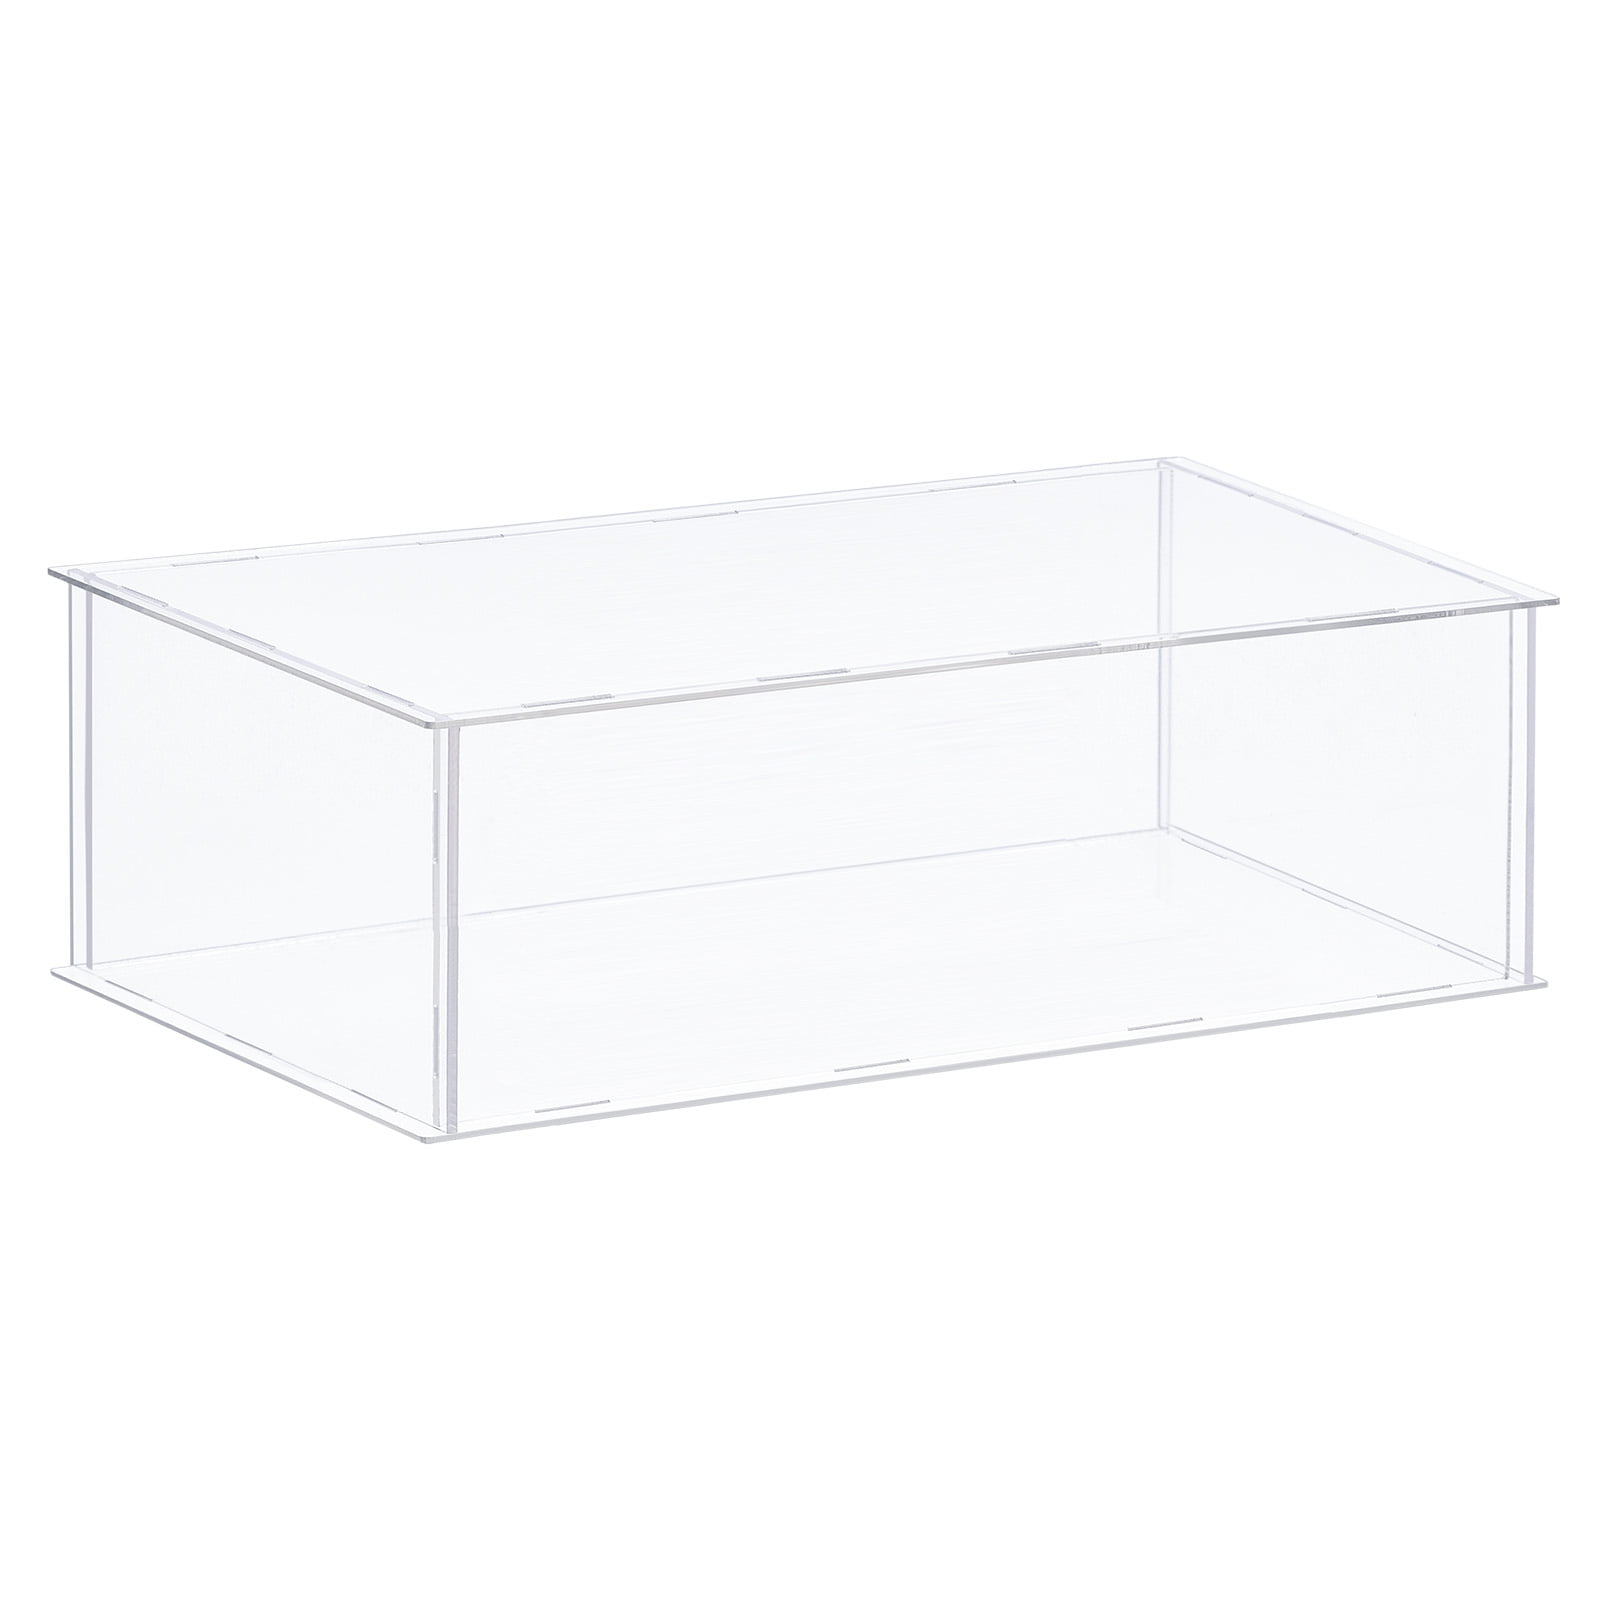 Acrylic Display Case Plastic Box Cube Storage Box Transparent Assemble Showcase 41x41x20.5cm for Collectibles, Size: 16 x 16 x 8, Blue